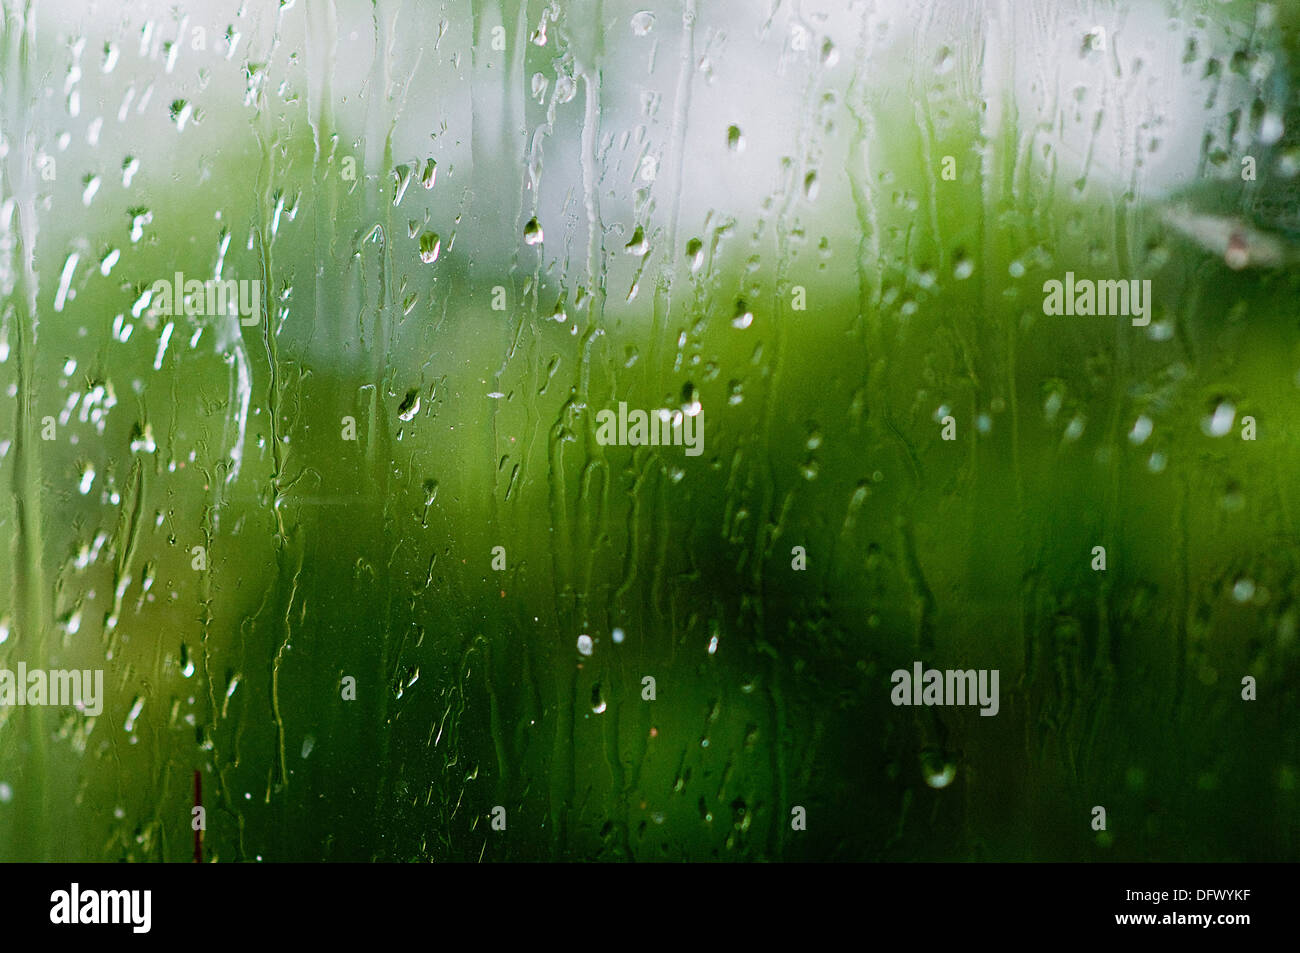 Las gotas de lluvia en la ventana Foto de stock